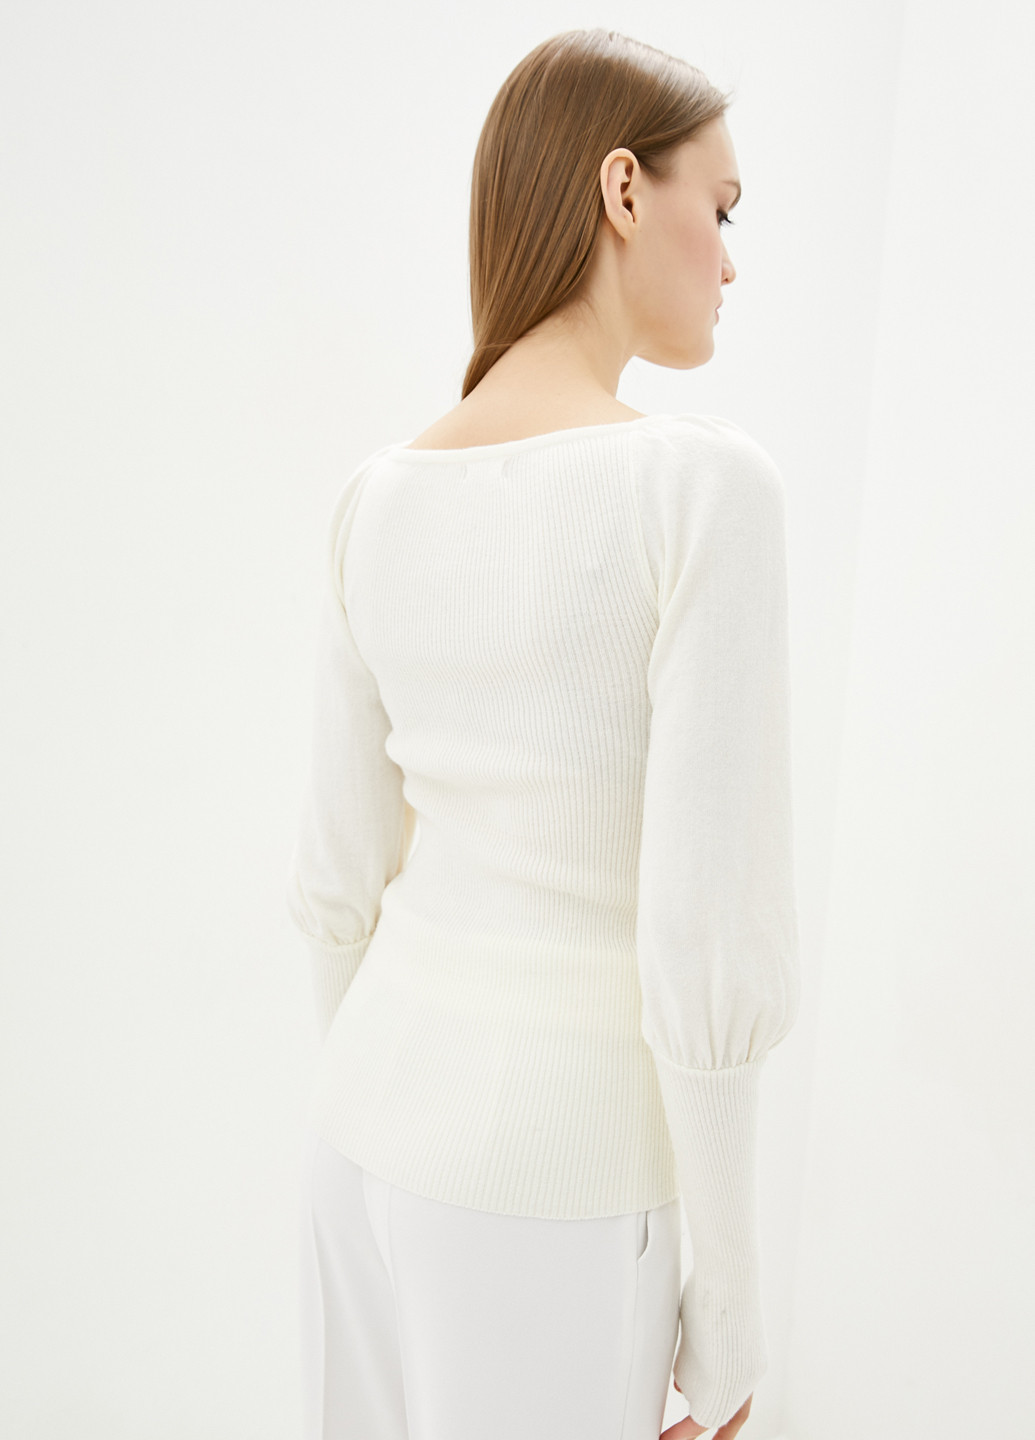 Белый демисезонный пуловер пуловер Sewel